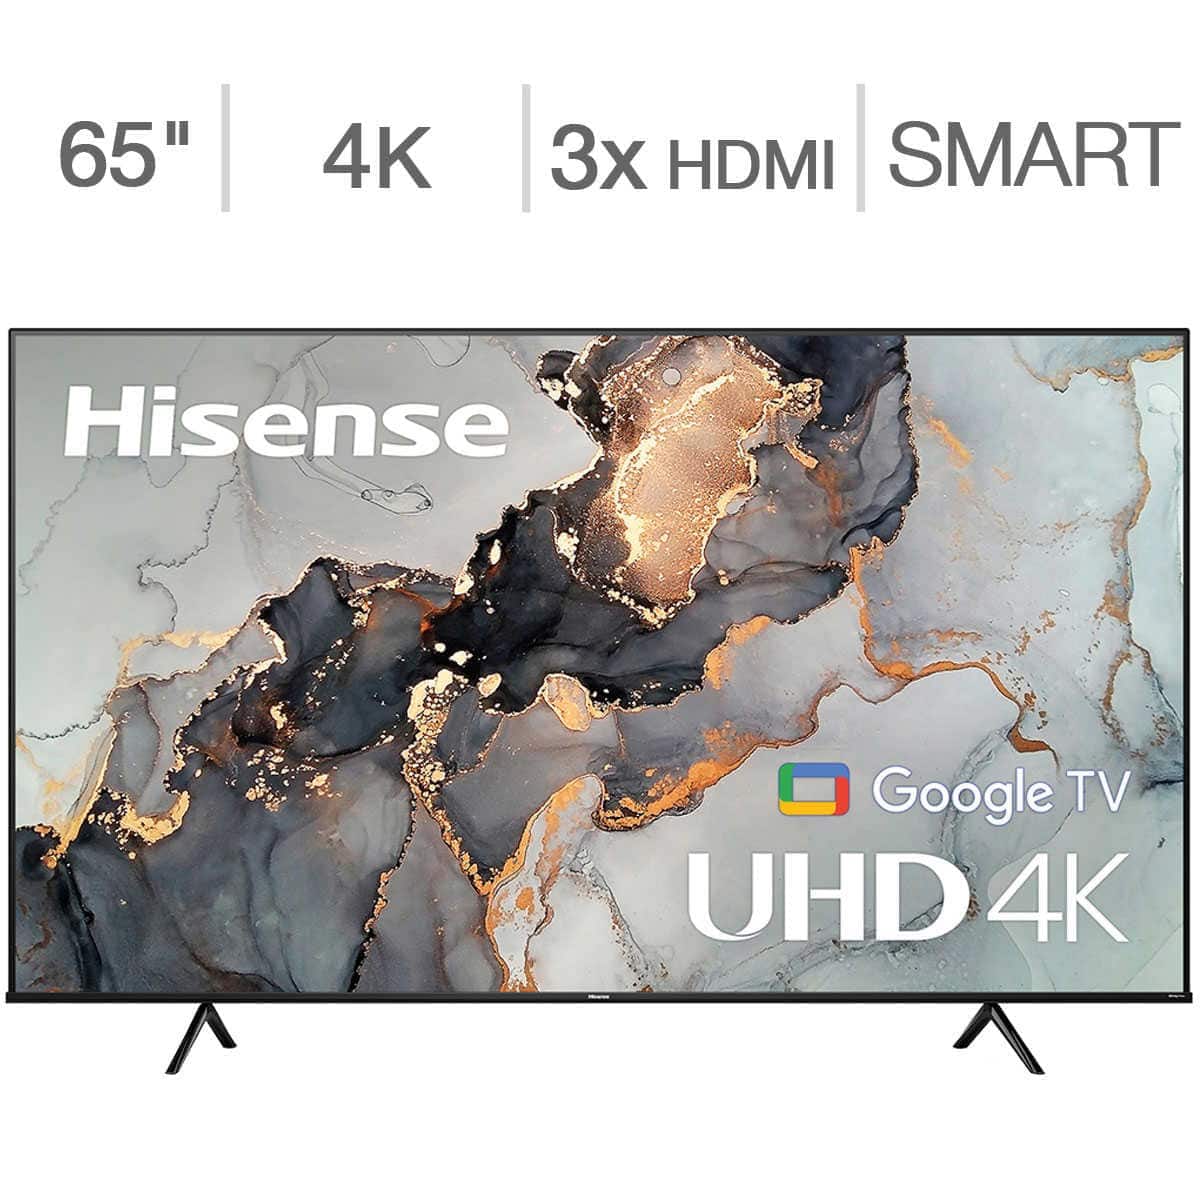 Upcoming 9/28 Offer: Costco Members: 65" Hisense Class A6 Series 4K Smart HDTV